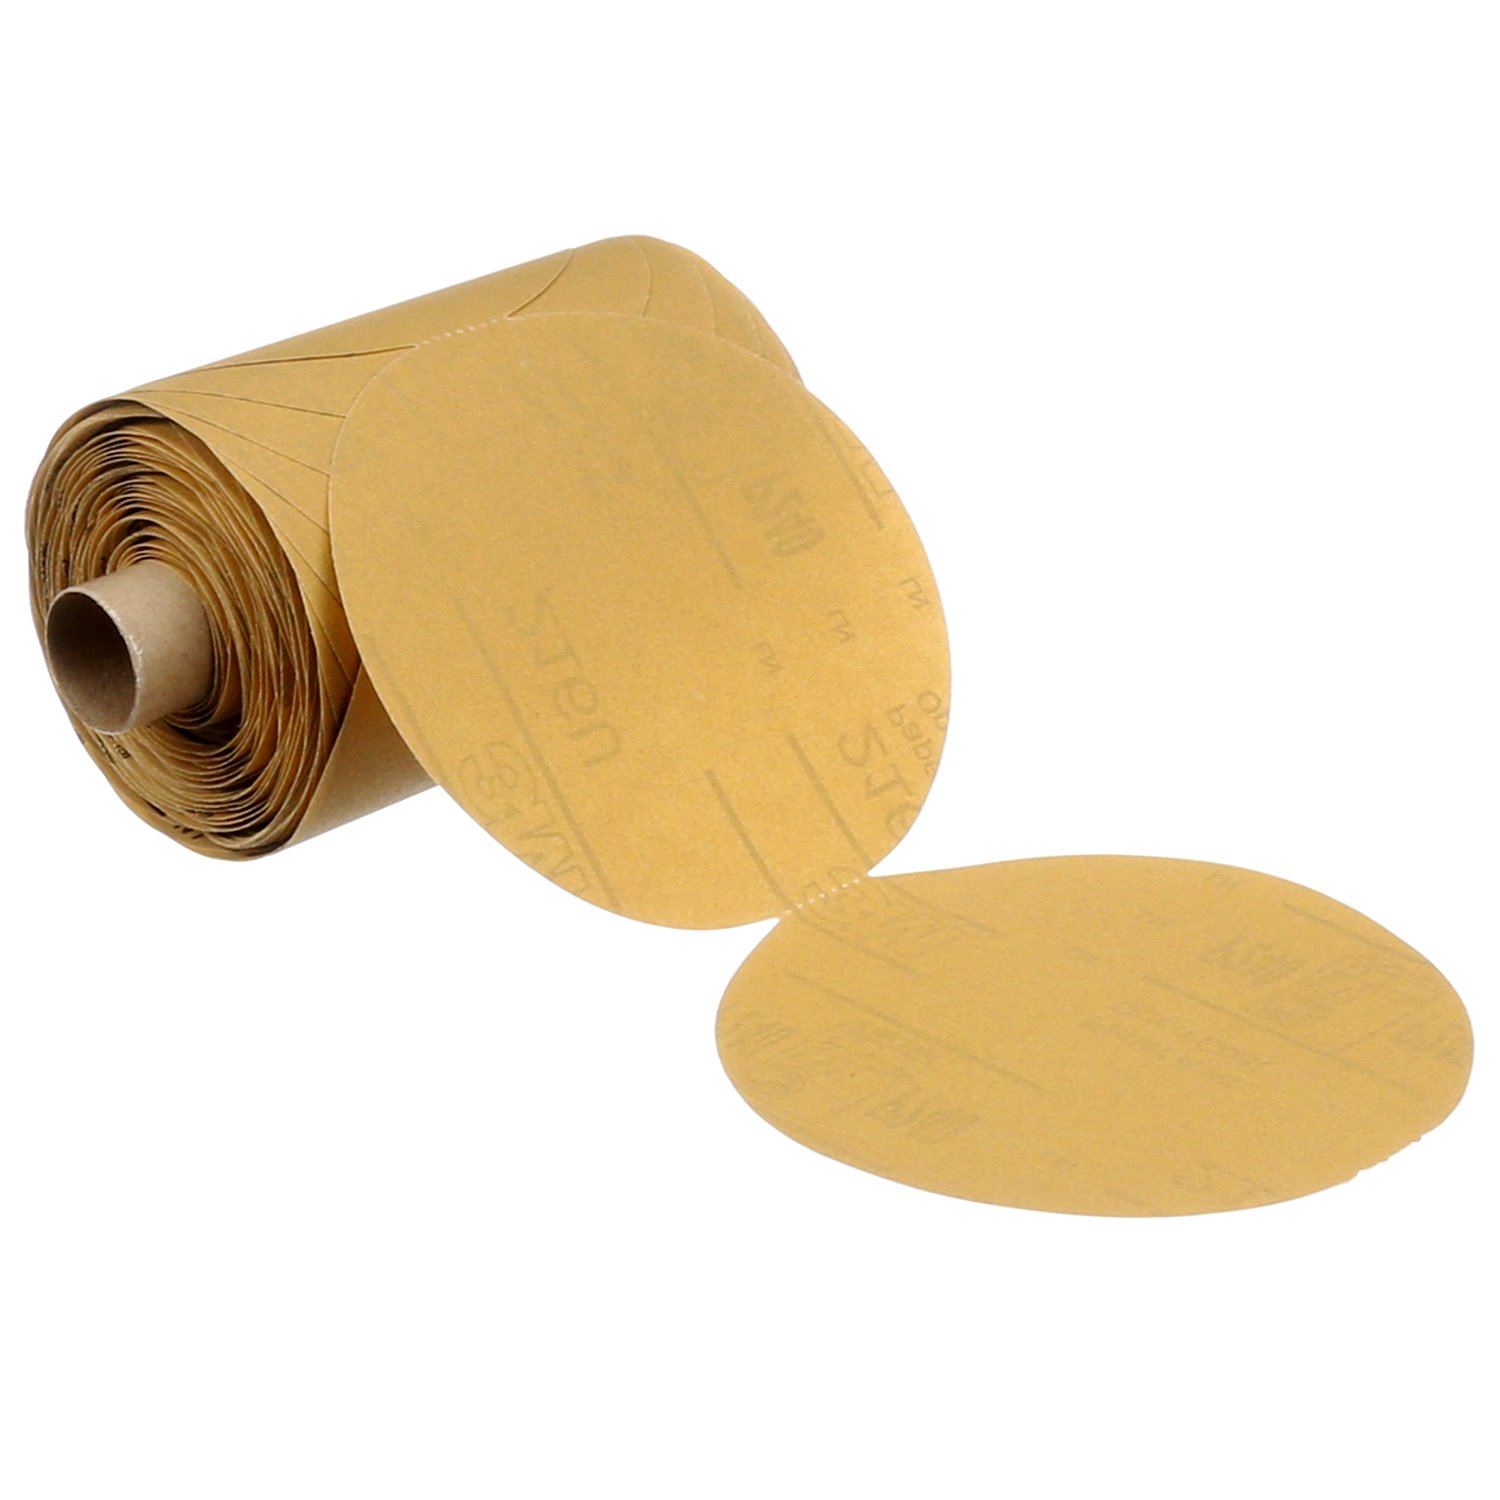 7000028127 - 3M Stikit Gold Paper Disc Roll 216U, 5 in x NH P150 A-weight, 175
Discs/Roll, 6 Rolls/Case